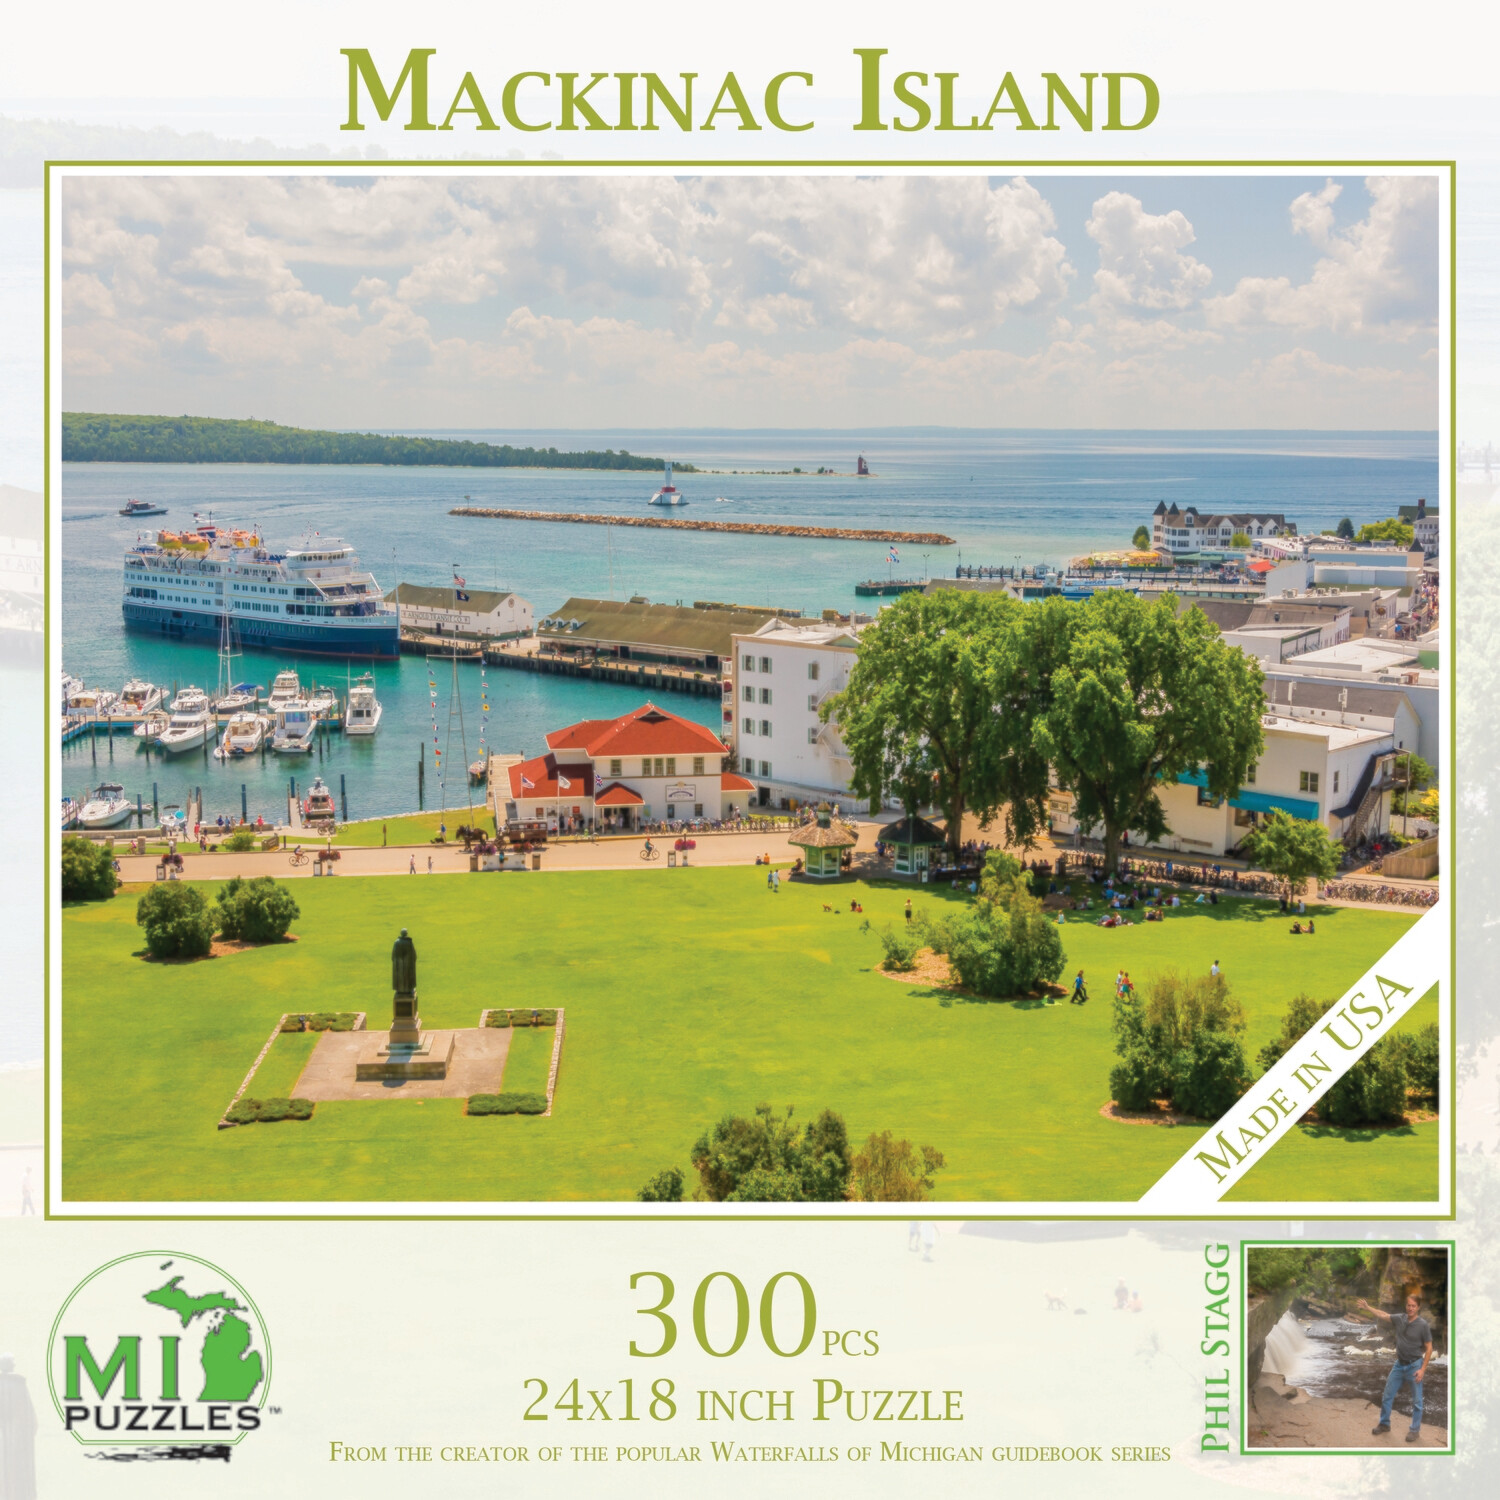 MACKINAC ISLAND